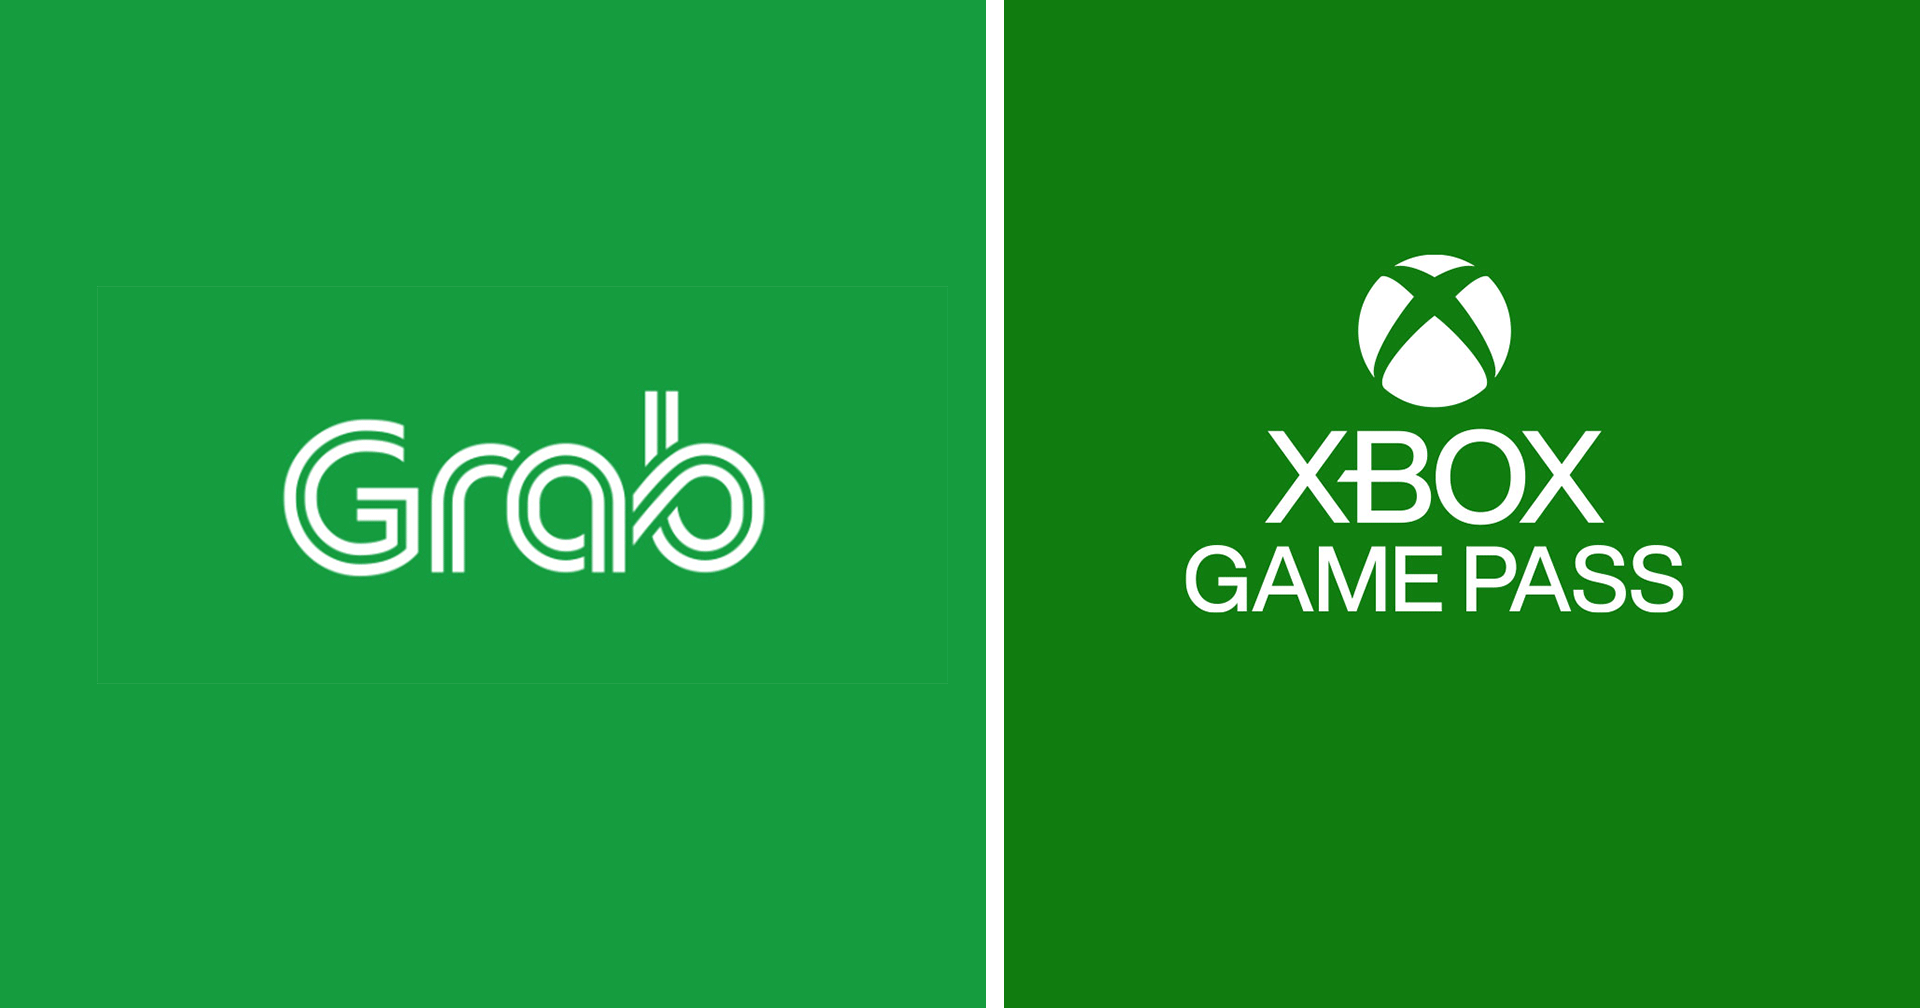 Grab Reward จัดโปรโมชัน 20 แต้มแลกโค้ด Xbox PC Game Pass 3 เดือน!!